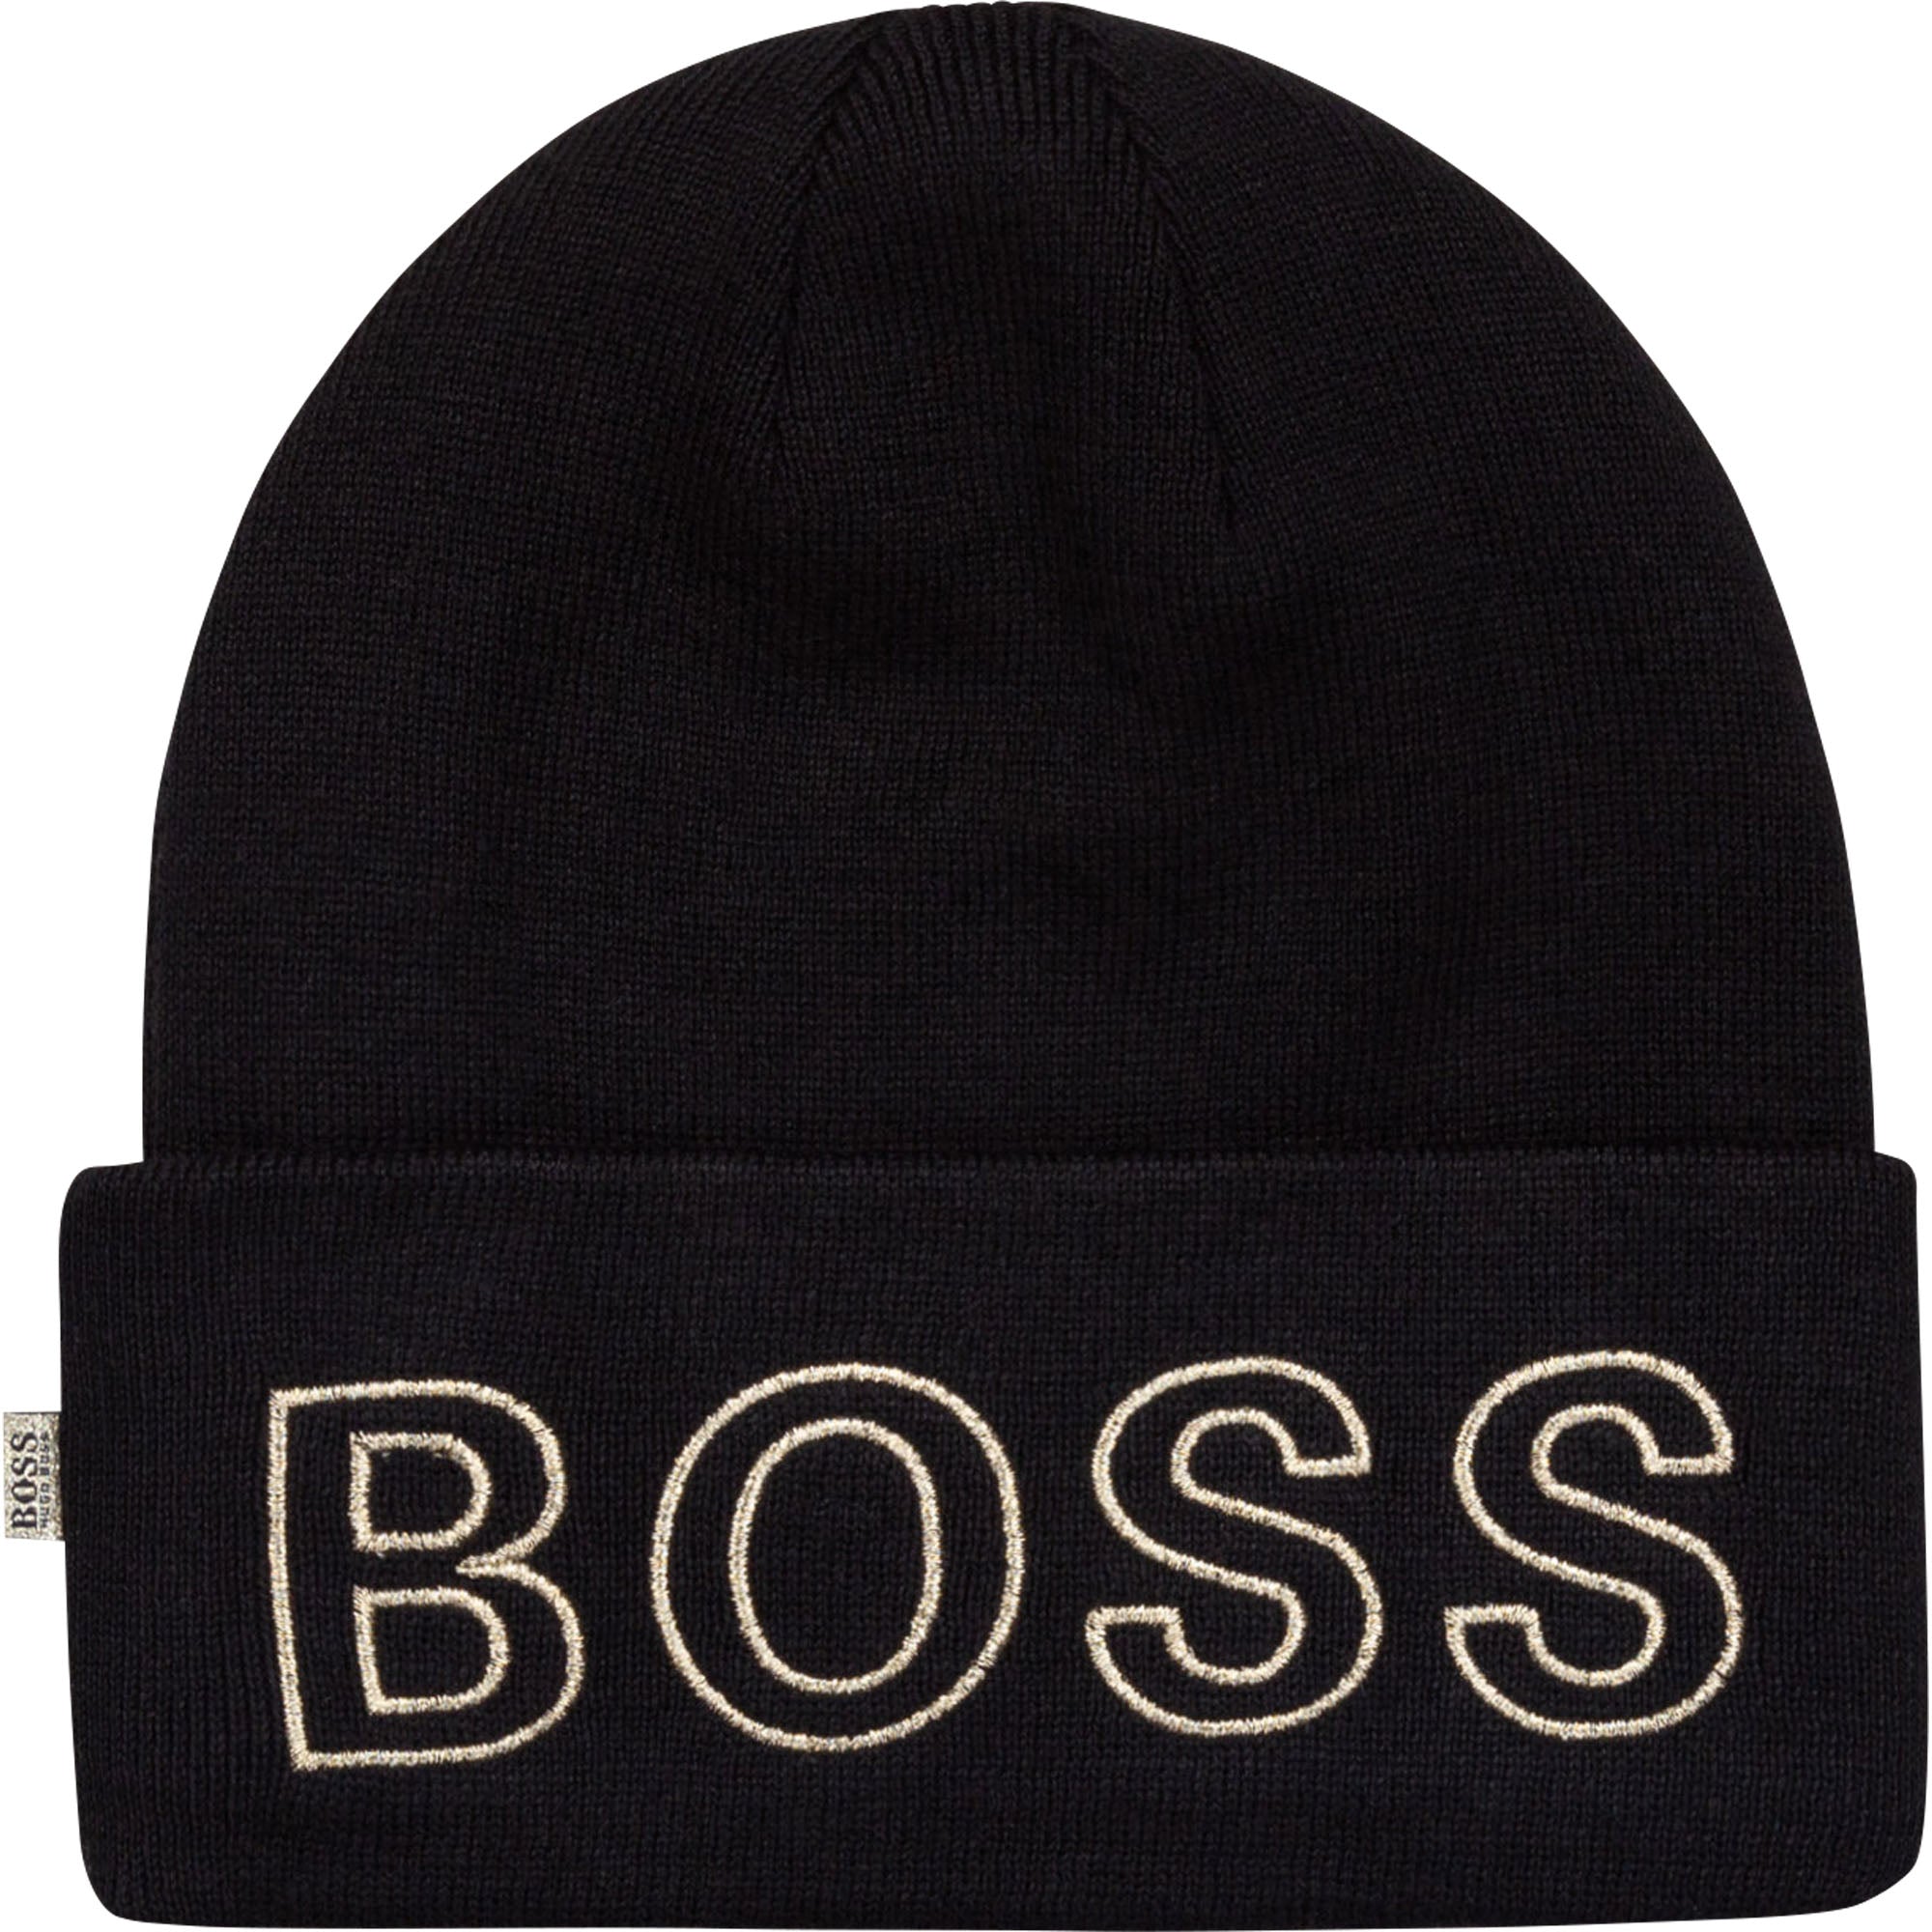 Boys Black Logo Knit Hat